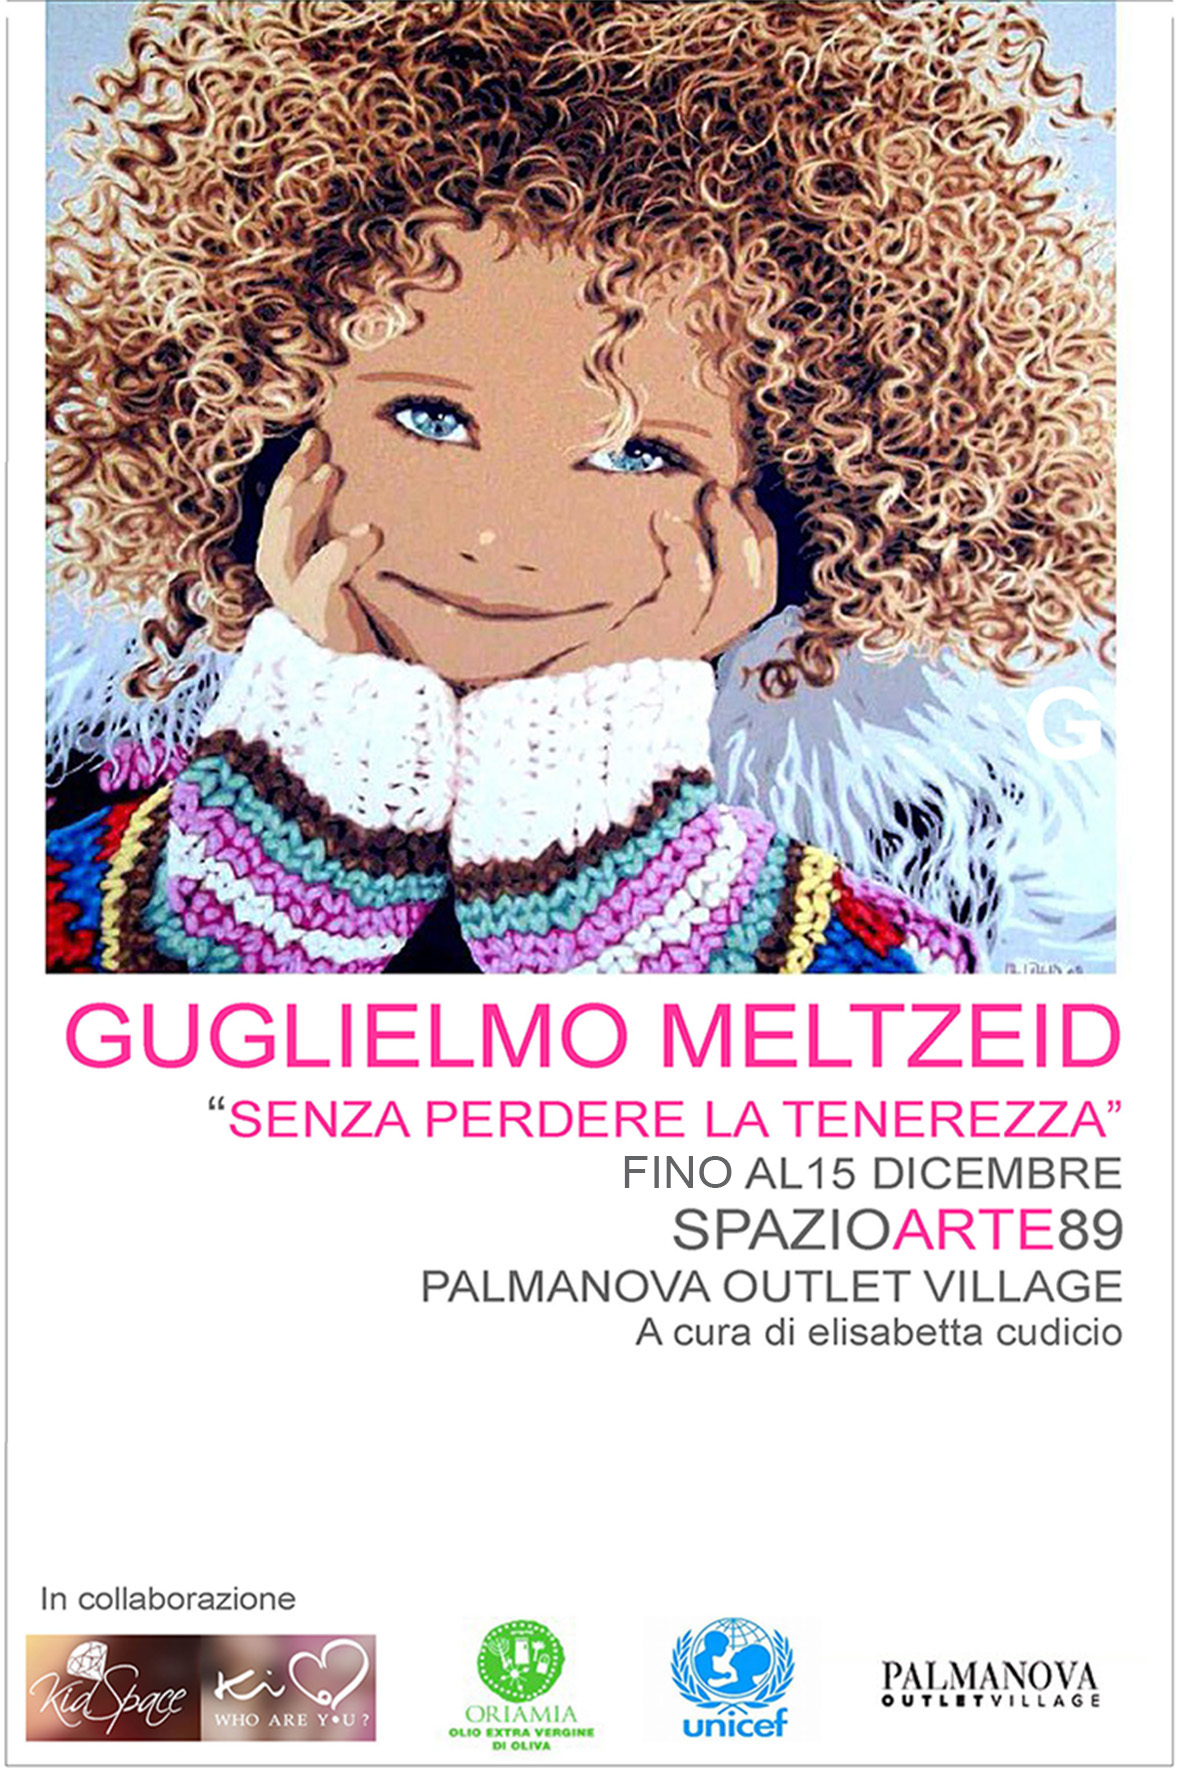 Guglielmo Meltzeid, 'Senza perdere la tenerezza', fino al 15 dicembre, SpazioArte89 - Palmanova Outlet Villlage © G.Meltzeid/Palmanova/UNICEF